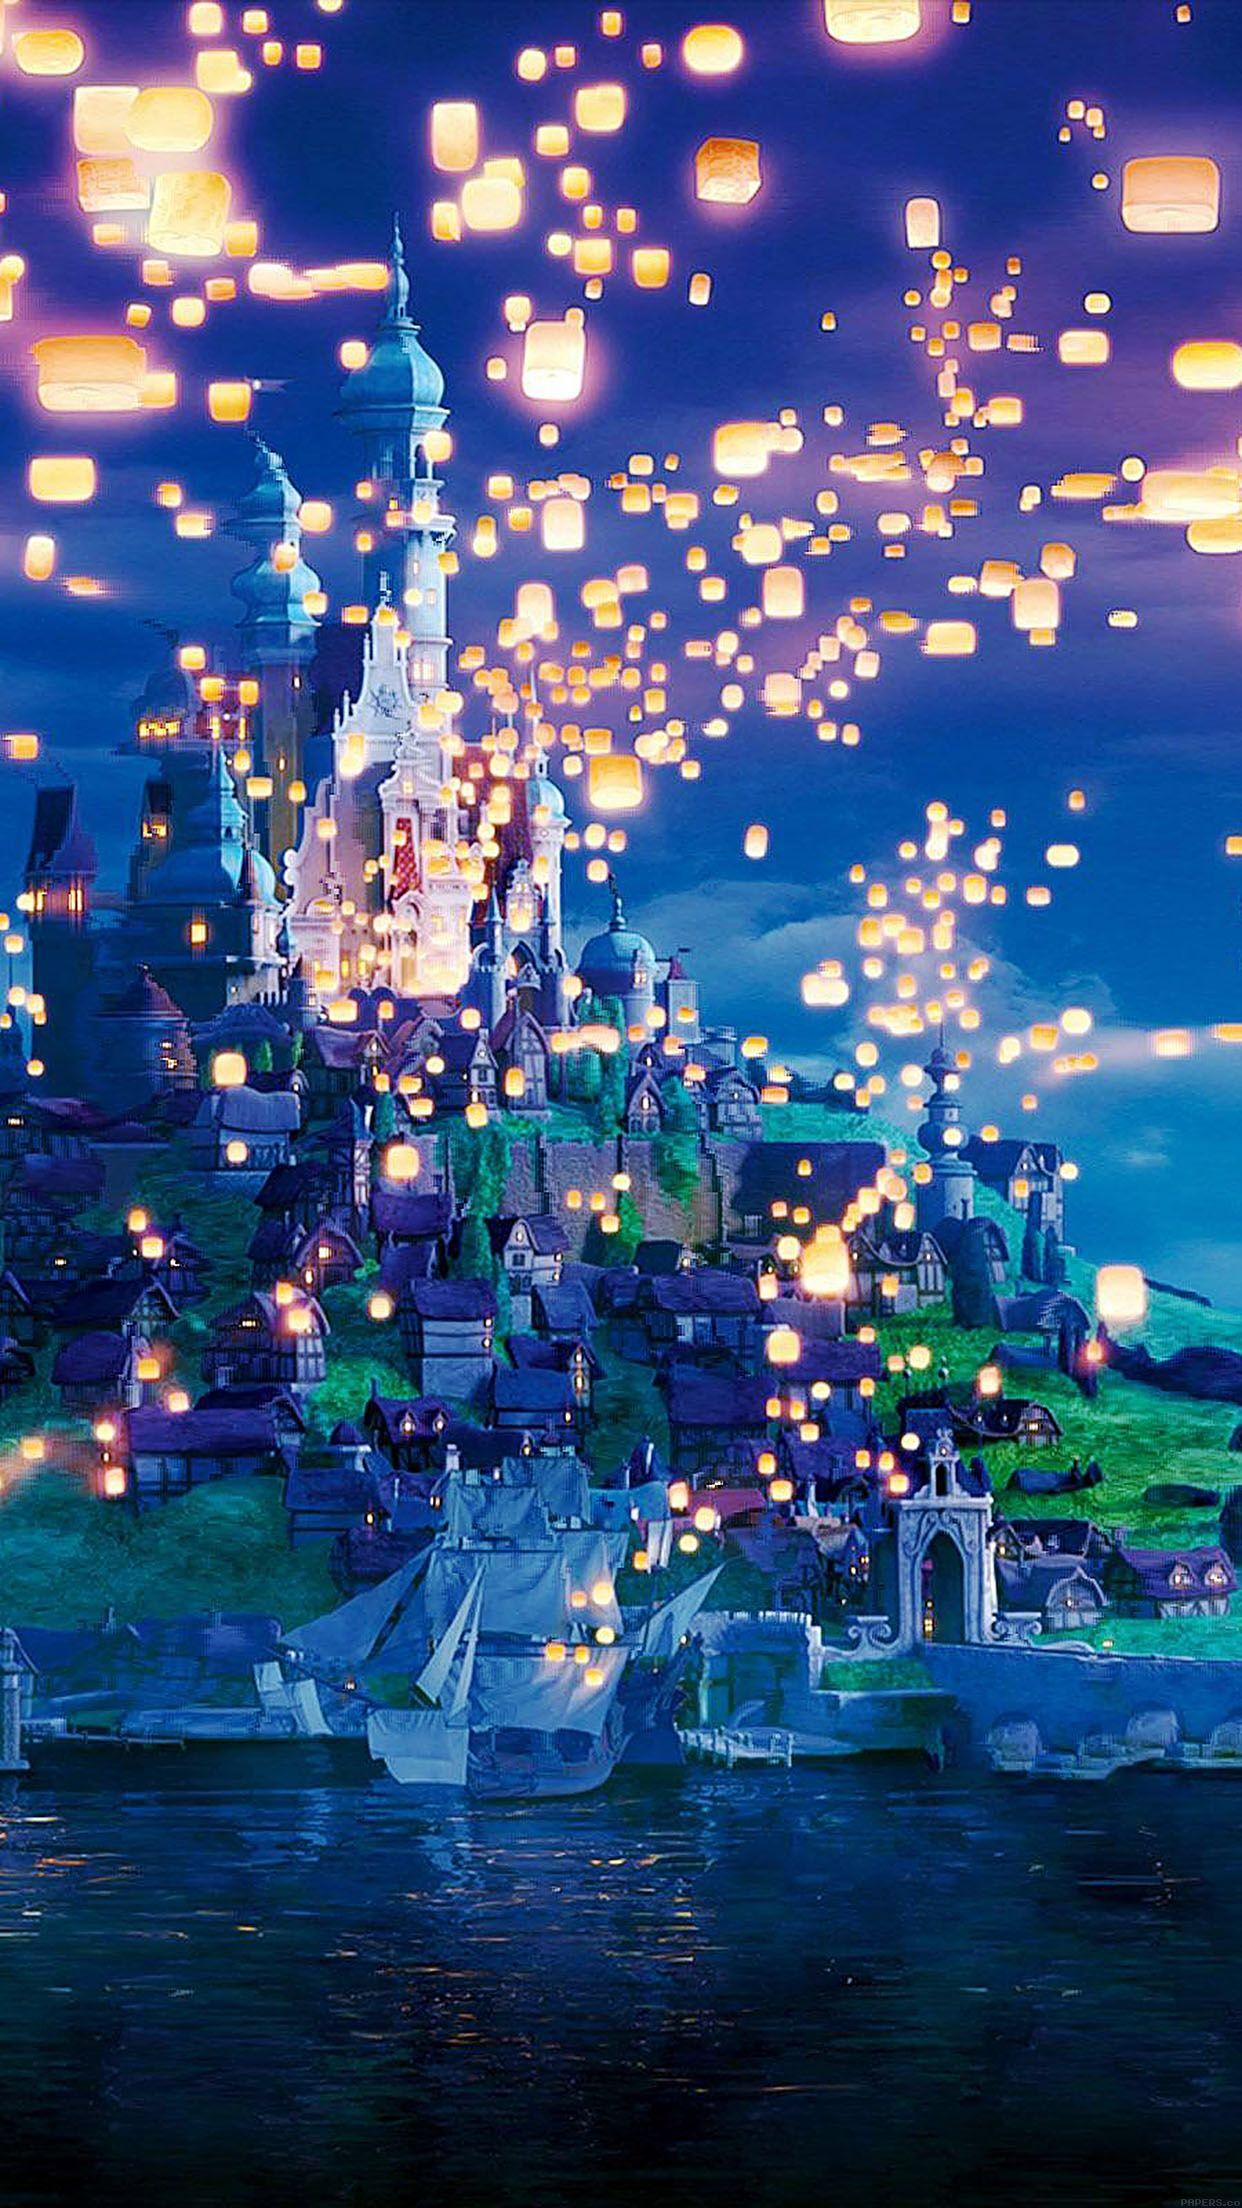 Tangled movie, lanterns. Disney phone wallpaper, Disney